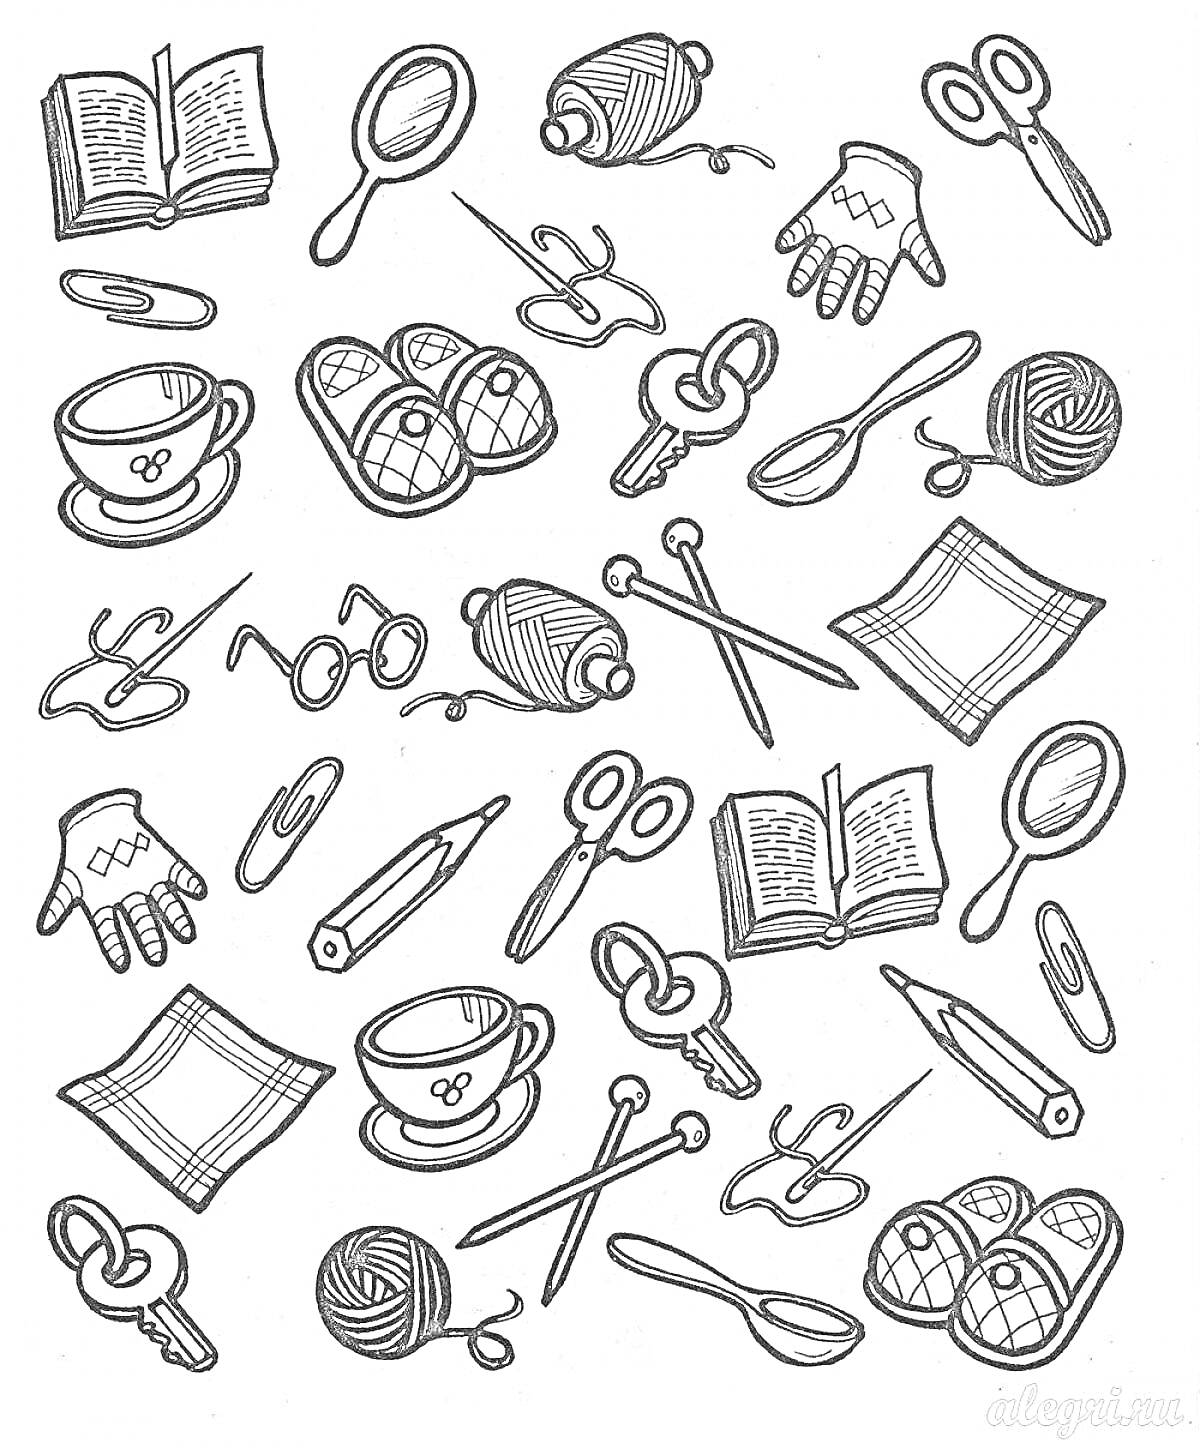 Раскраска Ключи, ножницы, иголка, клубок ниток, книги, чашки, очки, перо, ложка, носки, салфетки, перчатки, зеркало